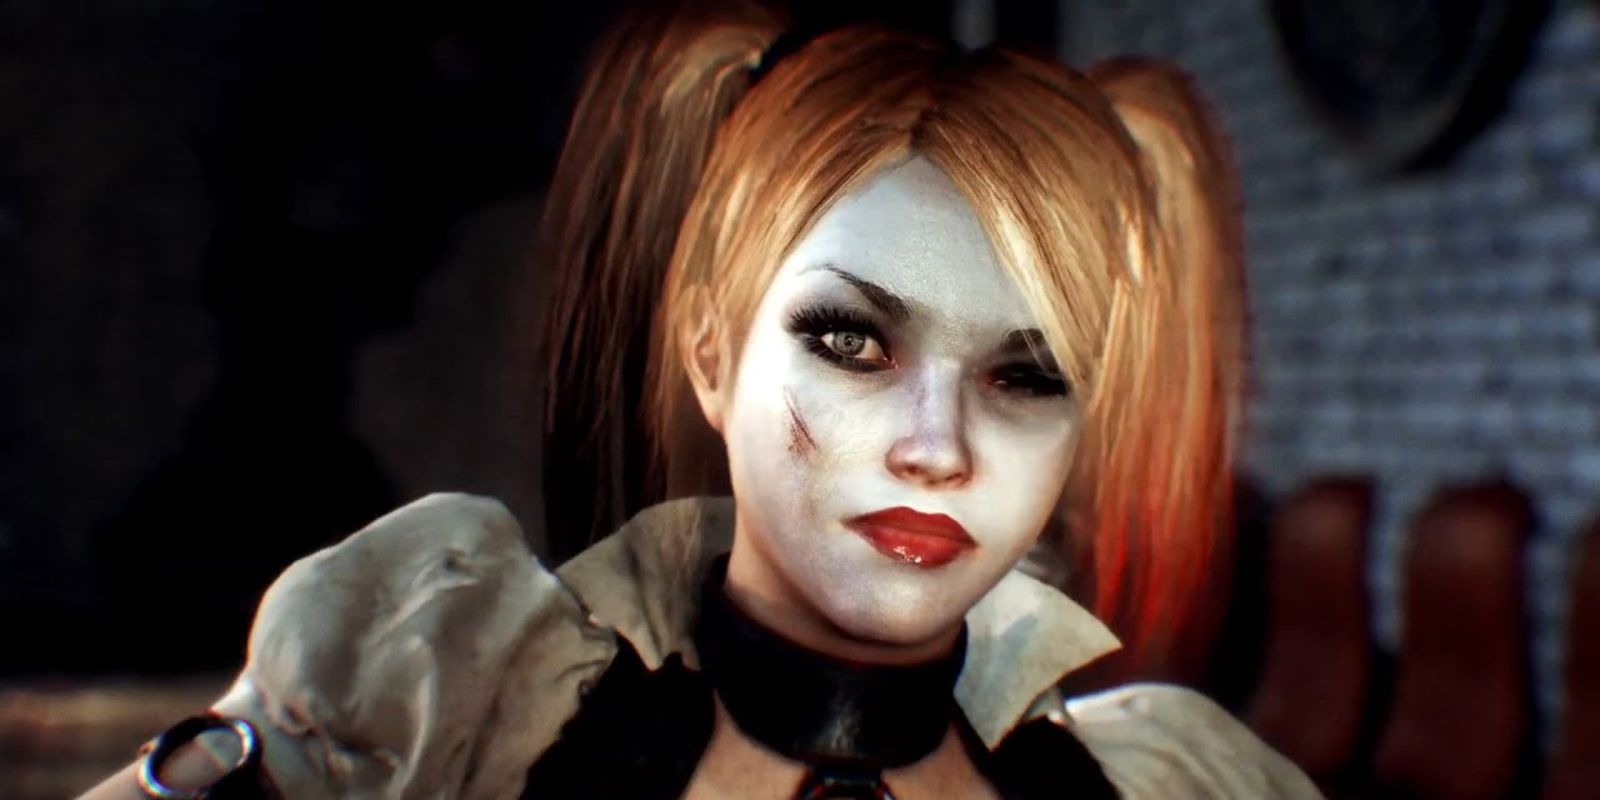 A screenshot showing Harley Quinn winking at the camera in Batman: Arkham Knight.